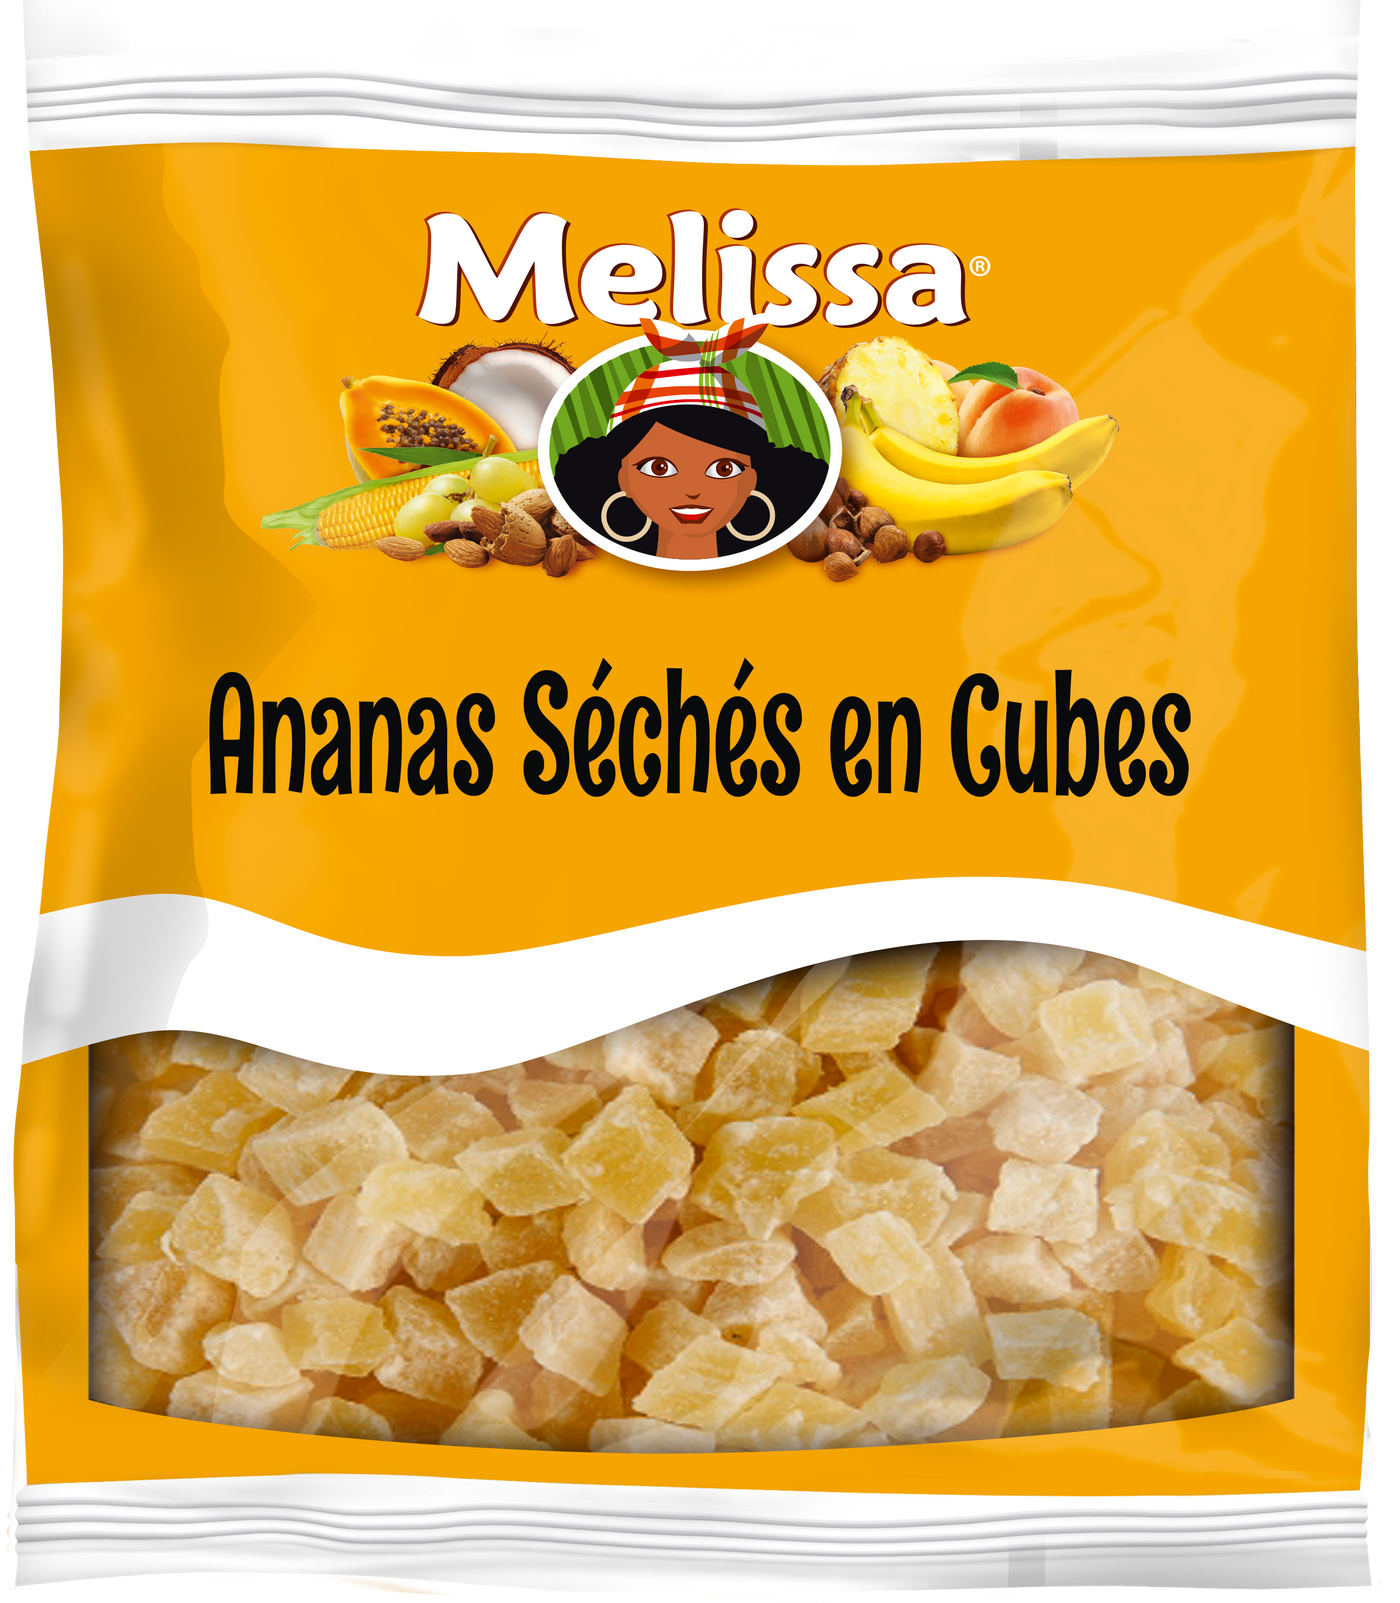 Melissa Ananas Sechée Cube 125g